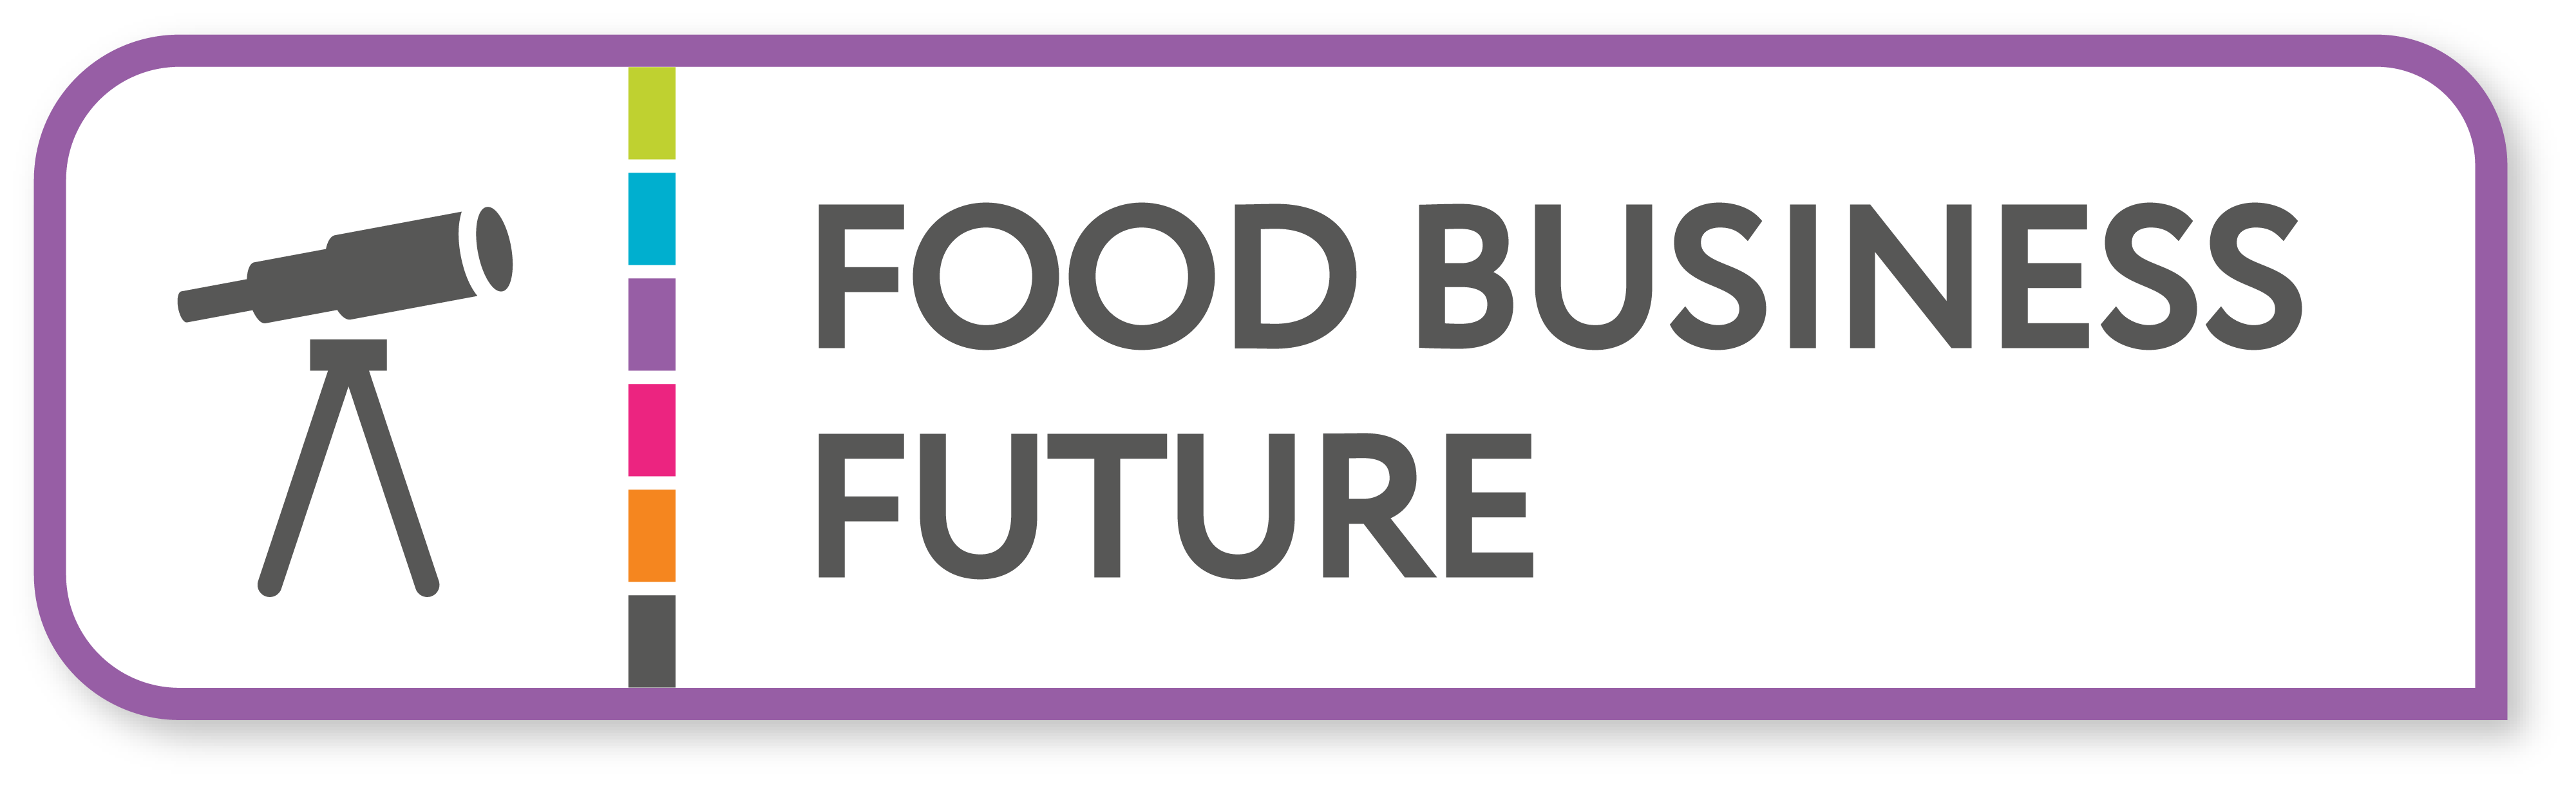 Food business future